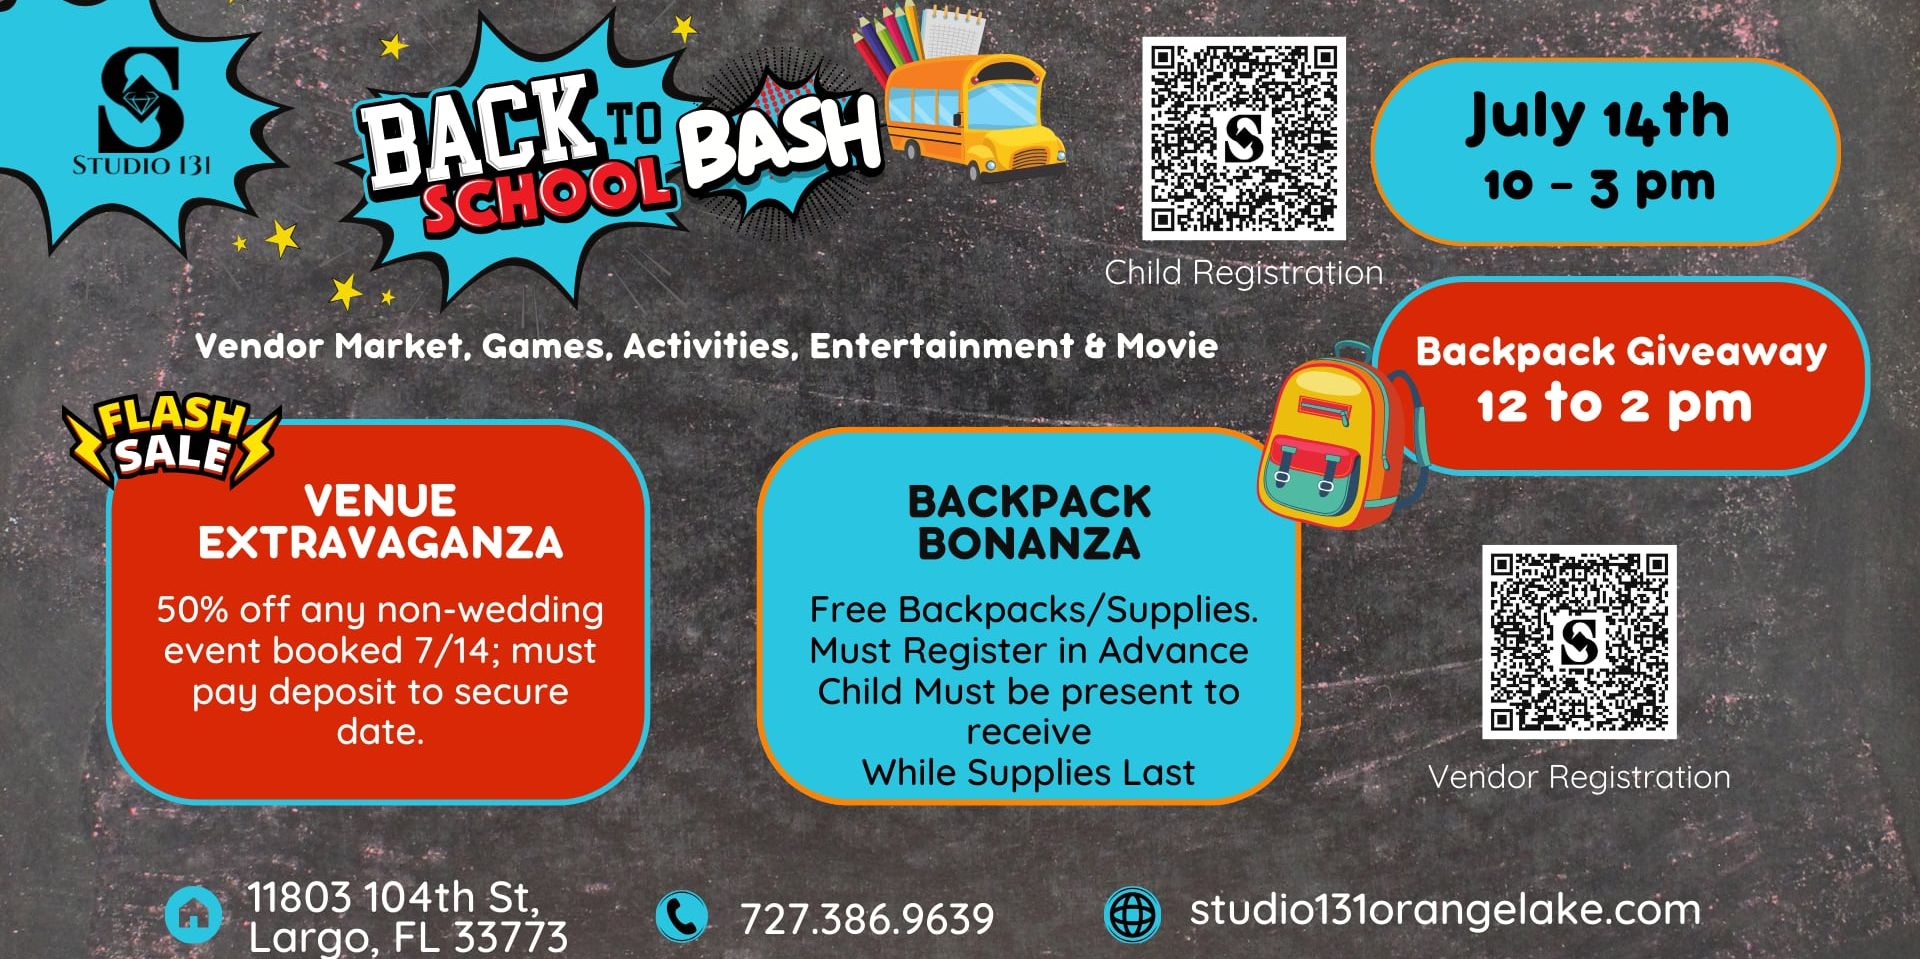 Back to School Bash - Venue Extravaganza & Backpack Bonanza promotional image